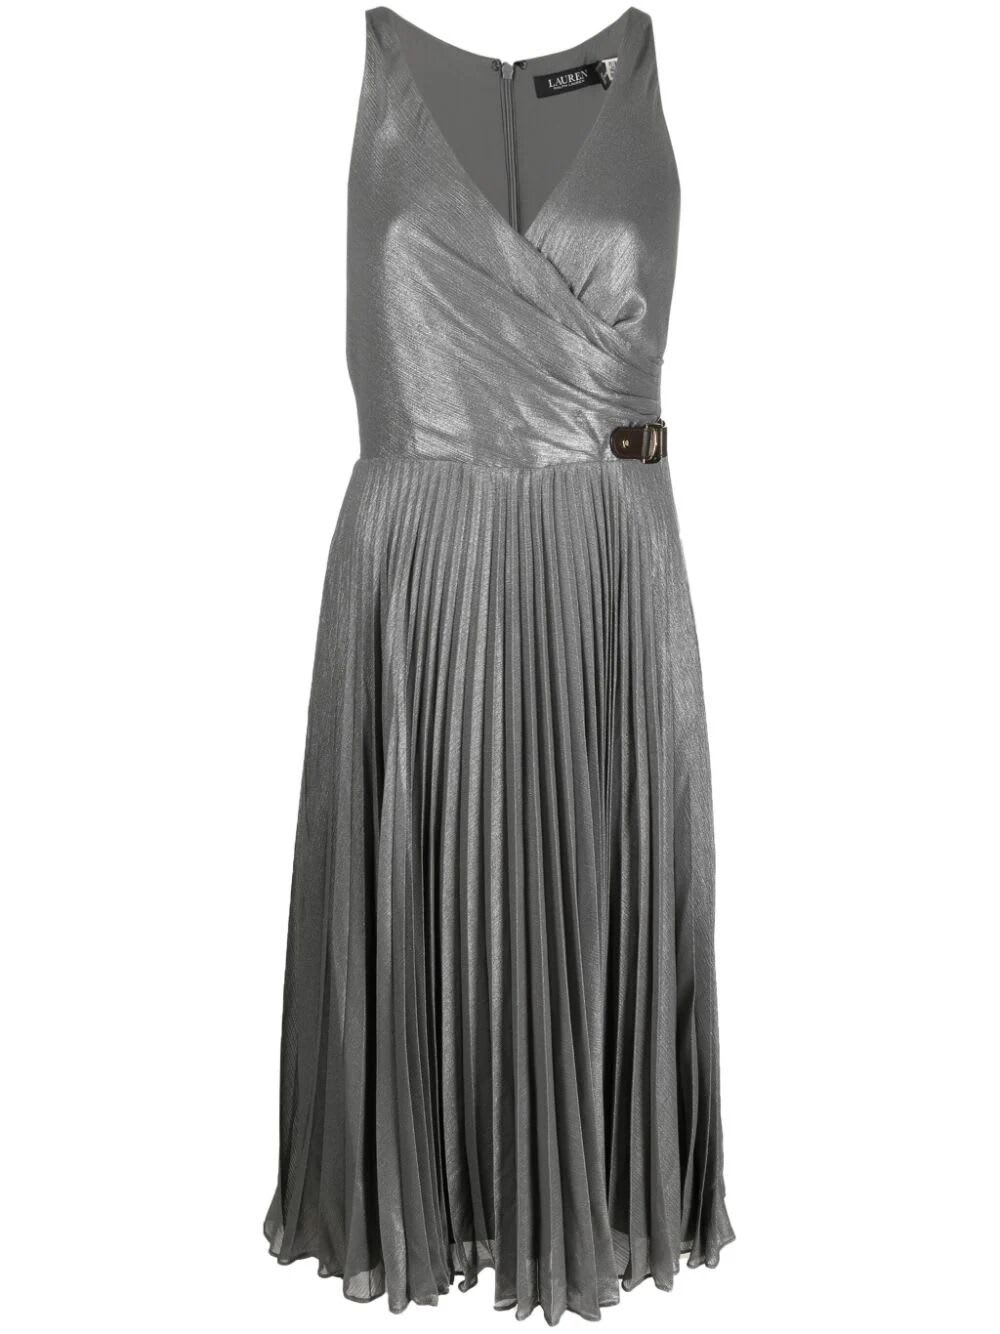 Ralph Lauren Dreshawn Sleeveless Cocktail Midi Dress